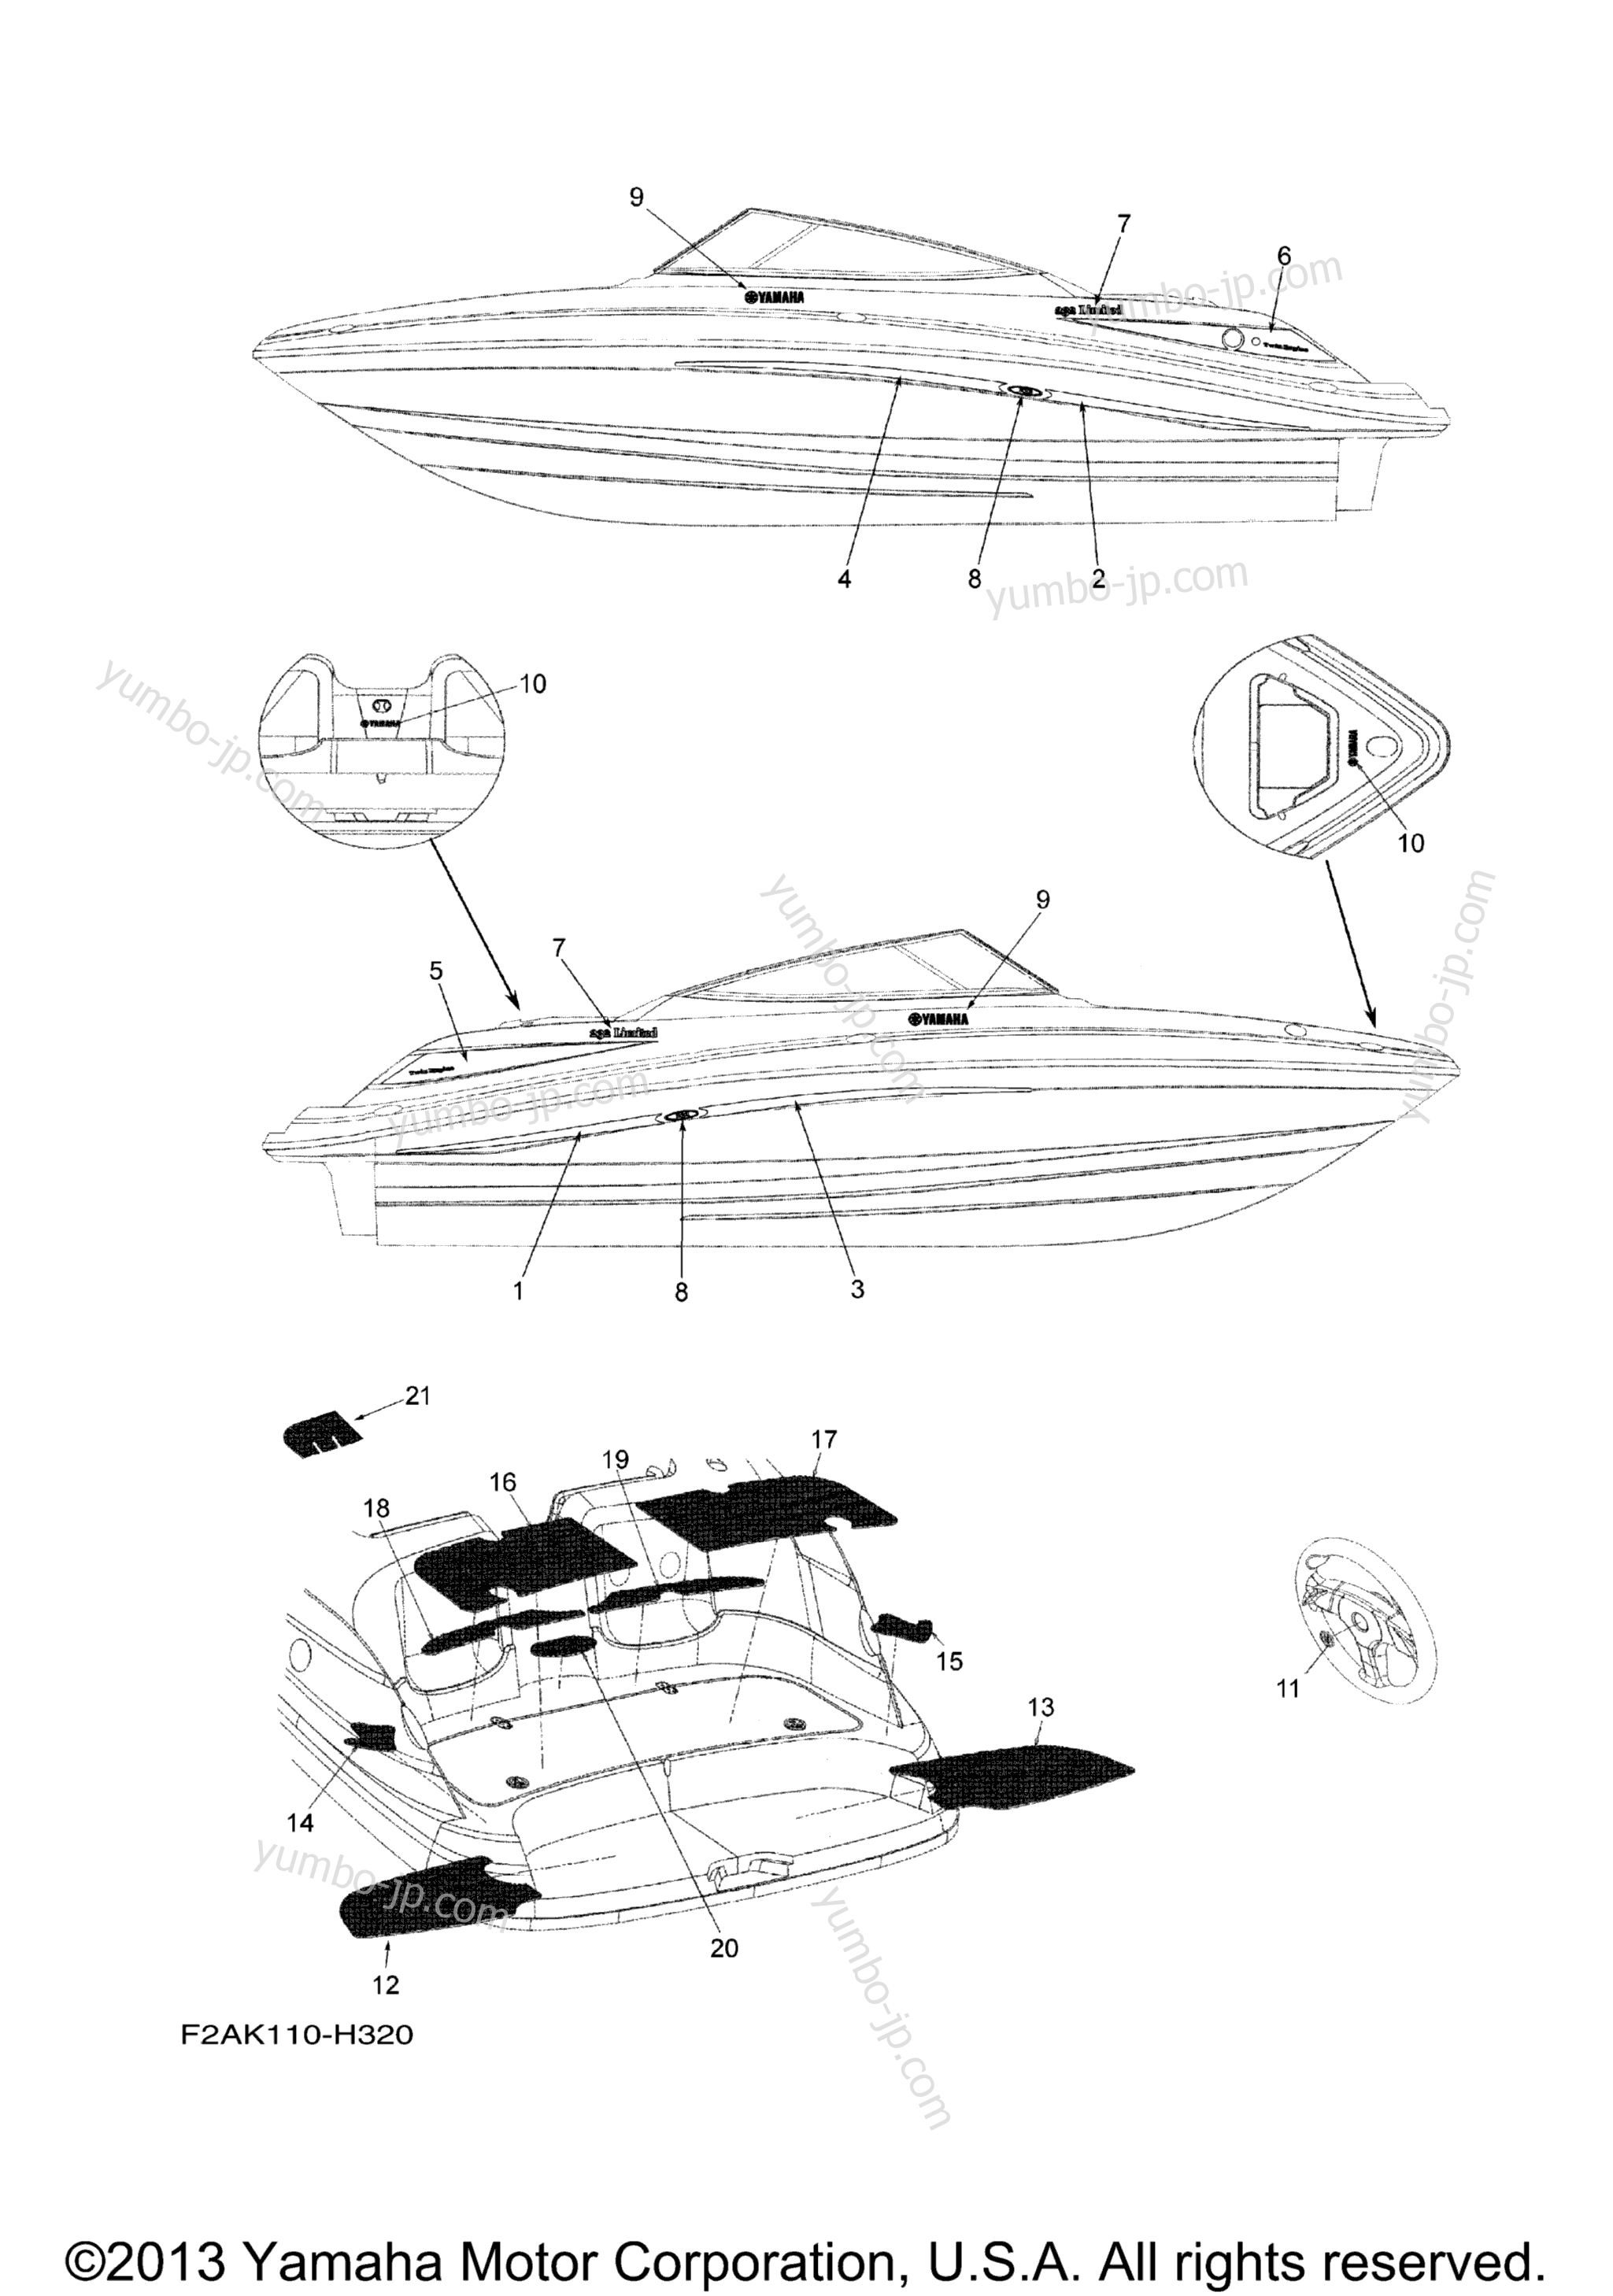 Graphics & Mats for boats YAMAHA 232 LIMITED (SXT1100HH) 2009 year